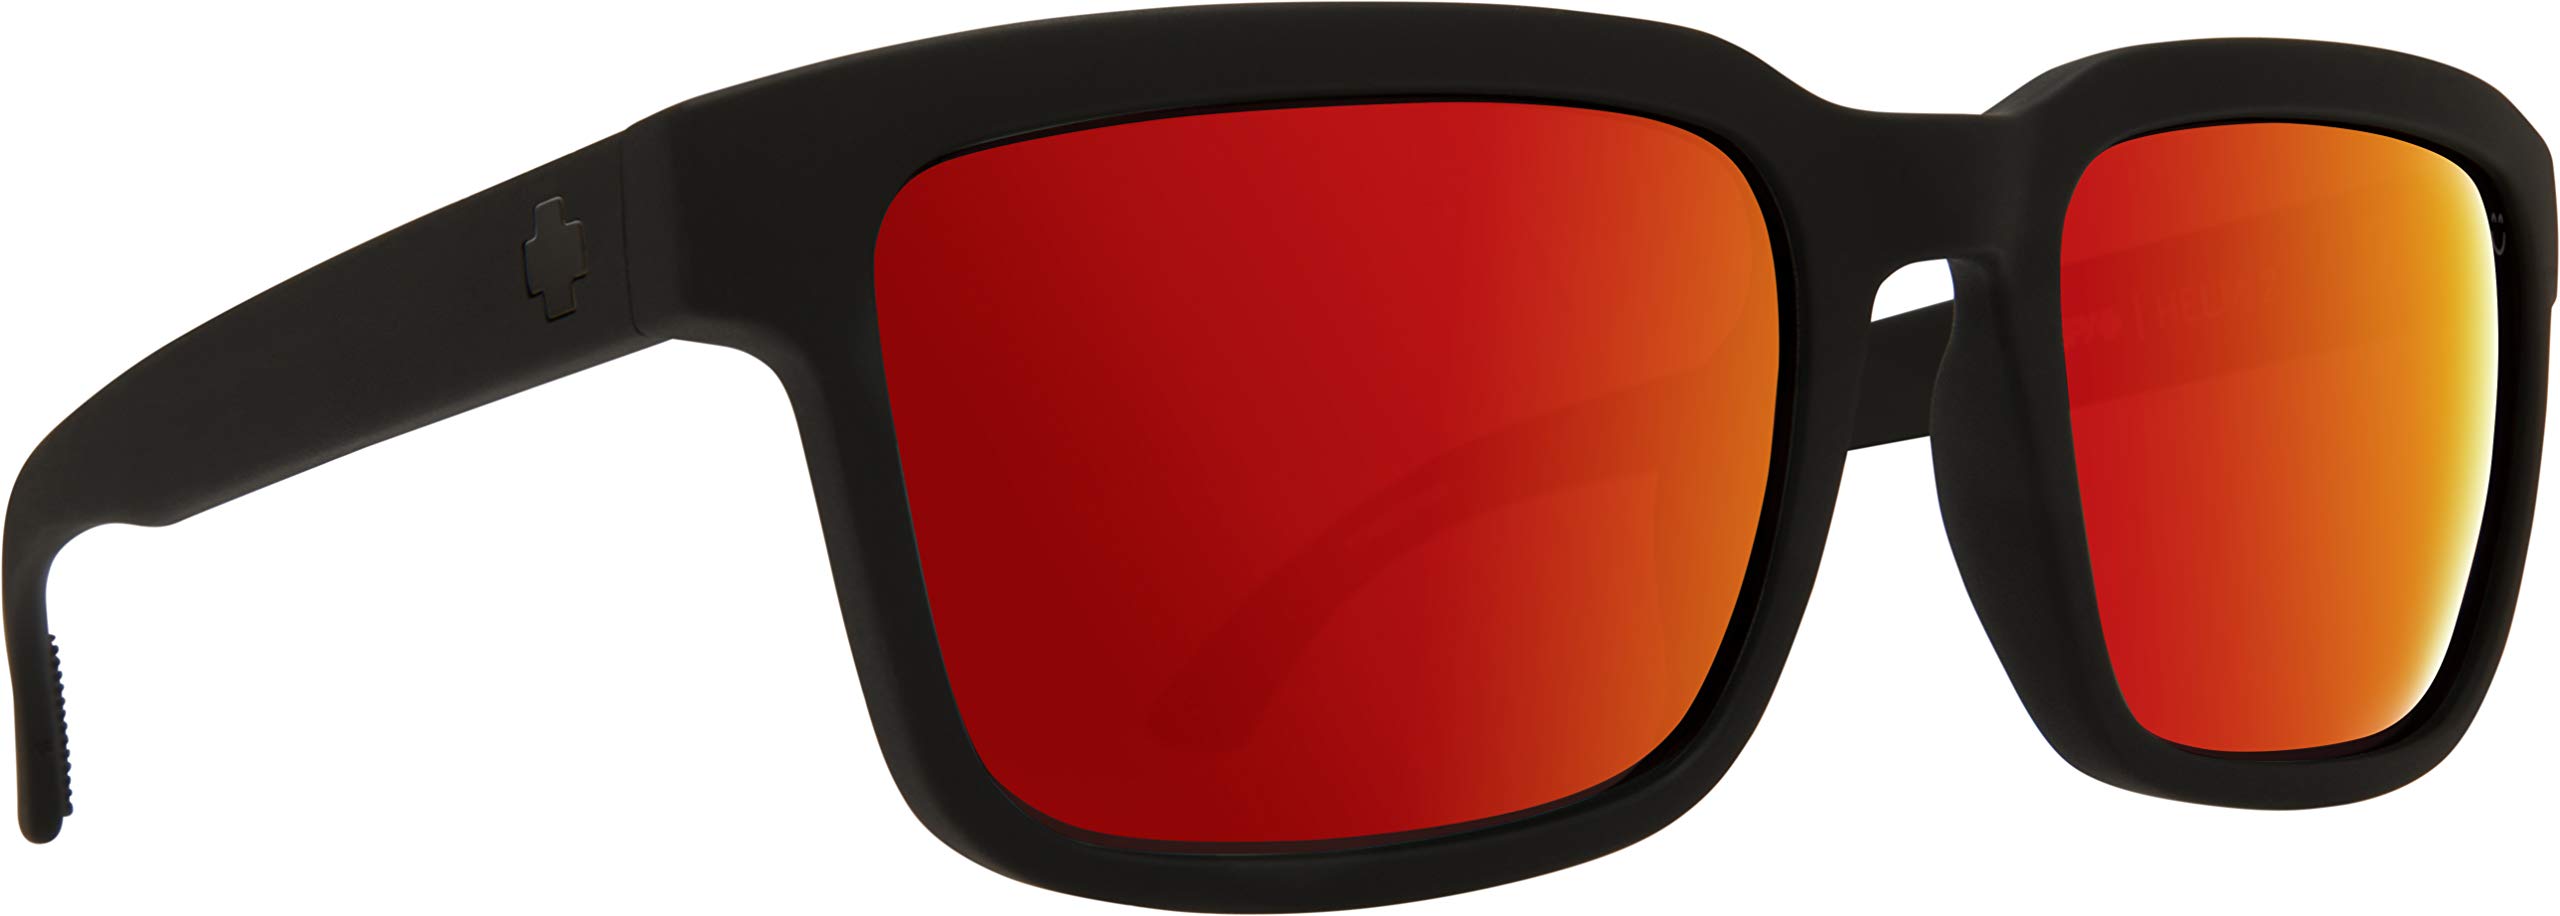 Spy Unisex Helm 2 Sonnenbrille, Matte Black